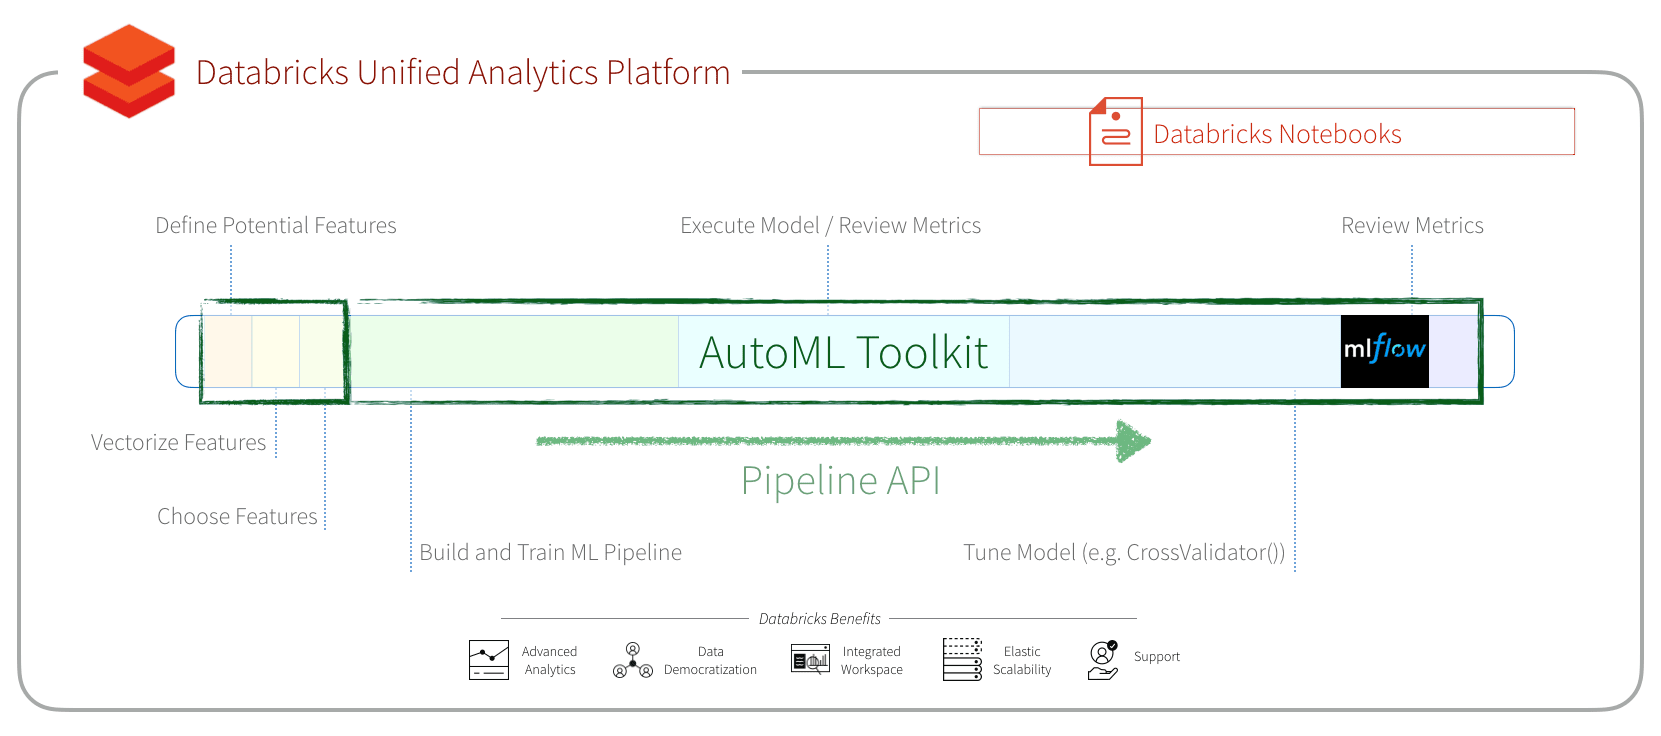 AutoML Toolkit Pipeline API